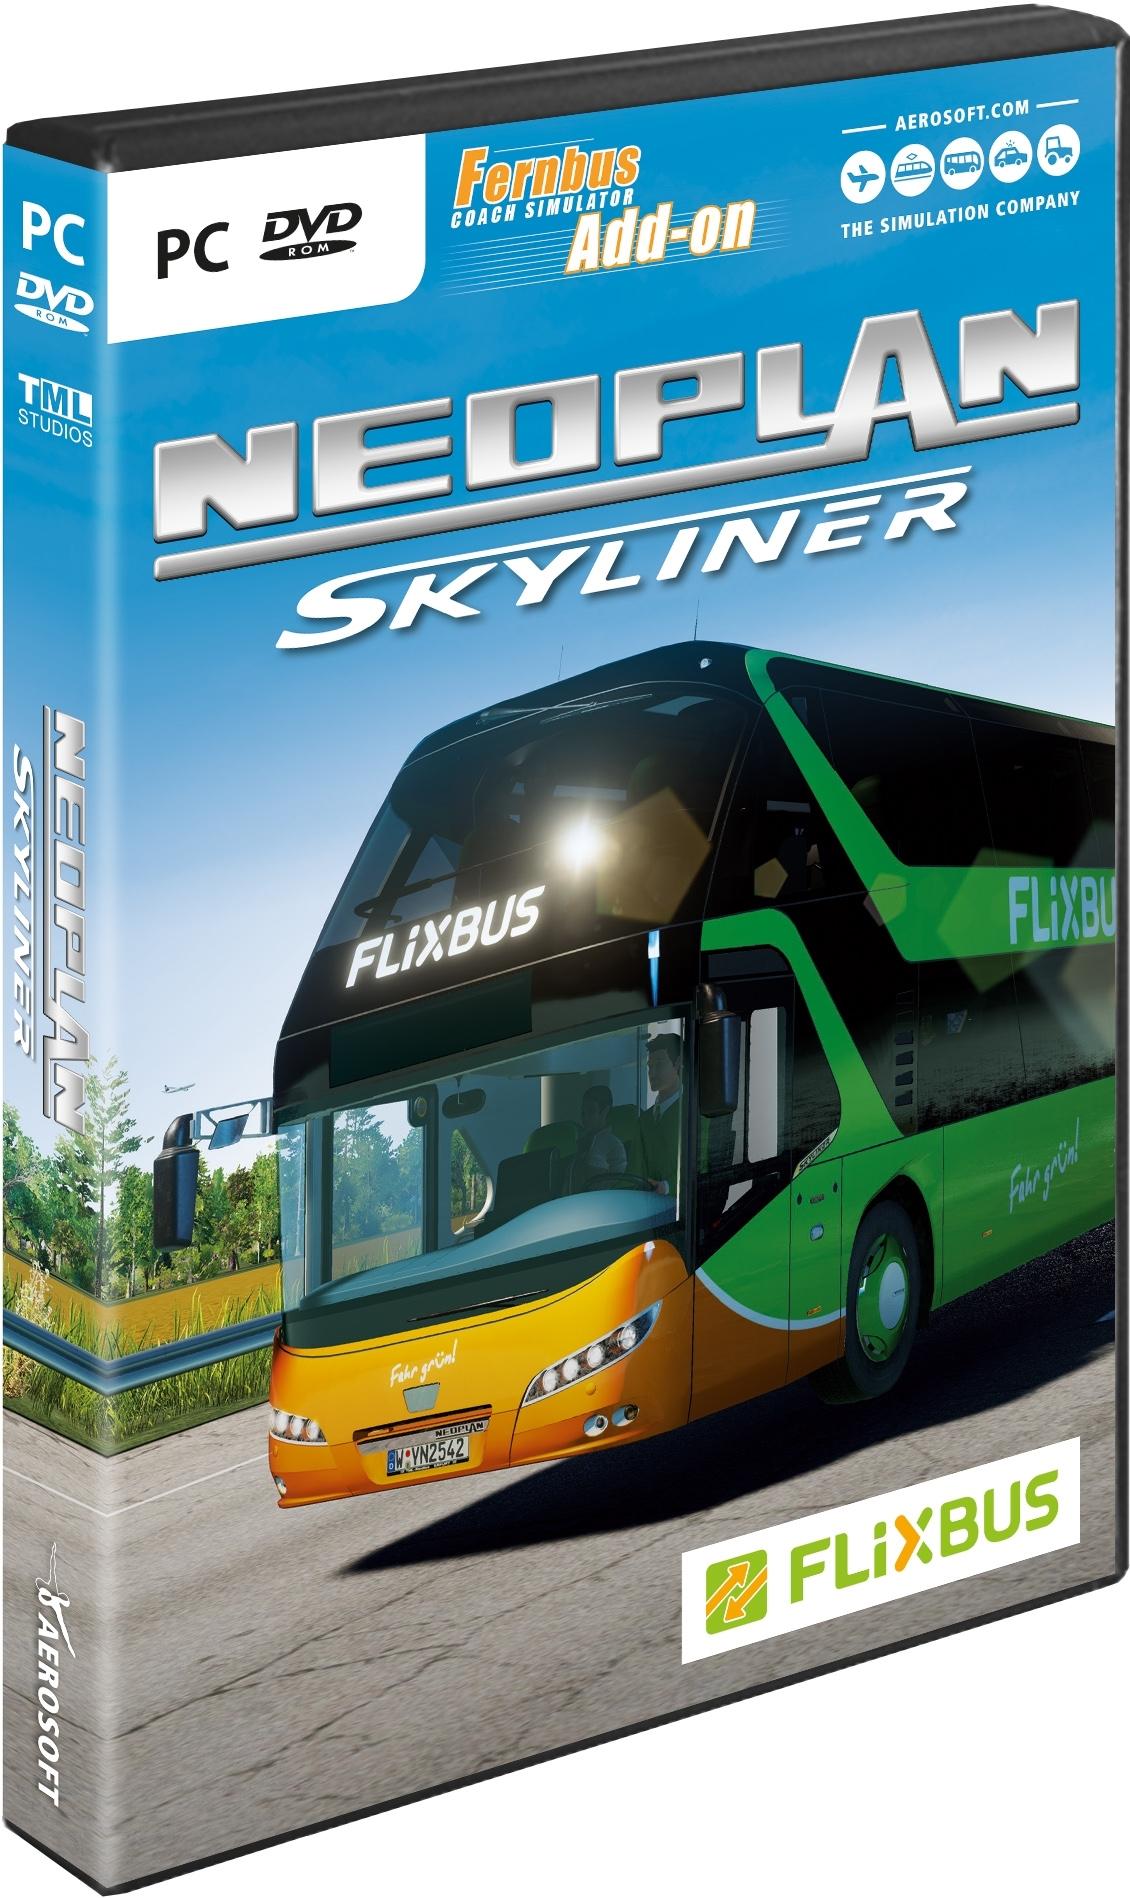 Fernbus Add-On Neoplan Skyliner | 14025 (4f5abec7-9e4d-ec49-ab49-16a9de61a418)